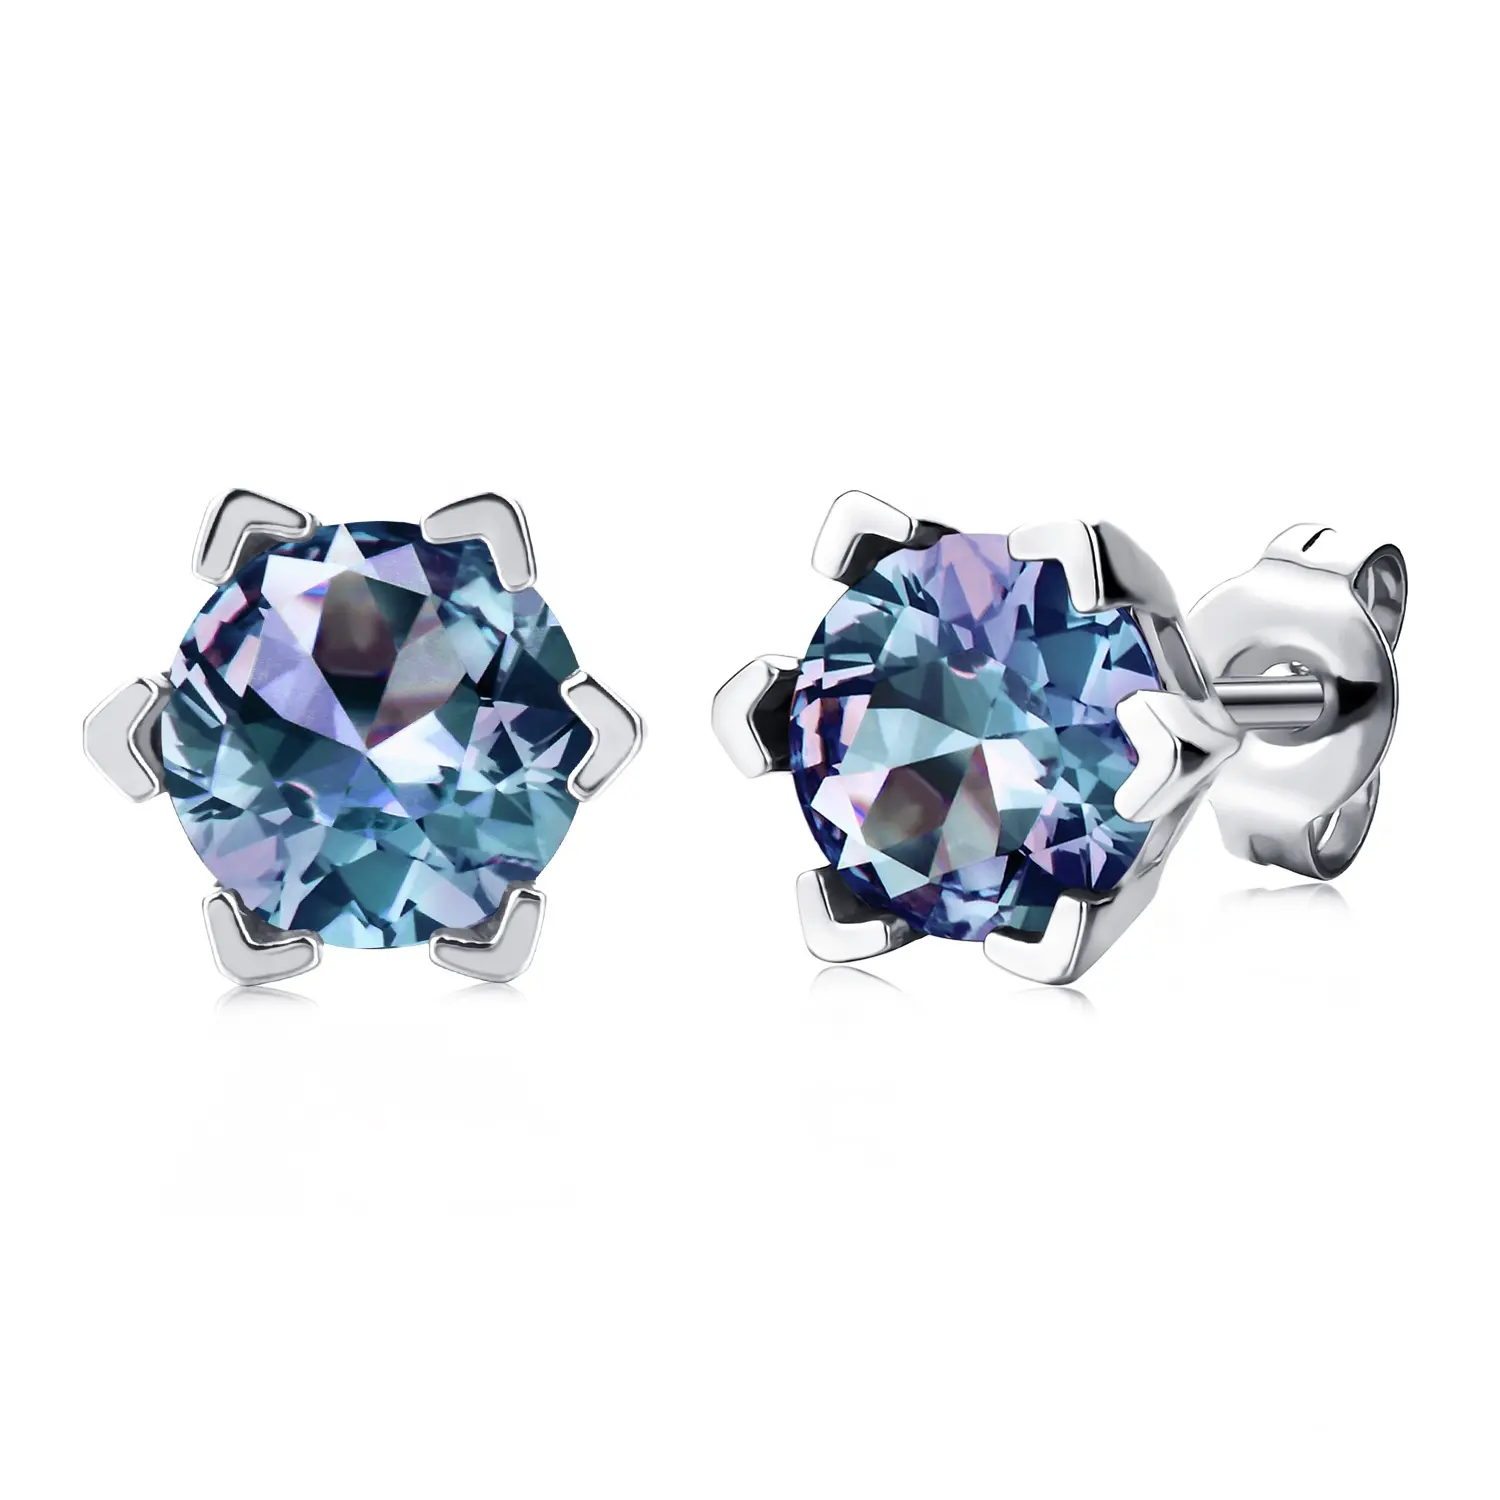 Silver 925 Round Cut Alexandrite Gemstone Round Stud Earrings Destiny Jewellery New Minimalist Women Jewelry 2021